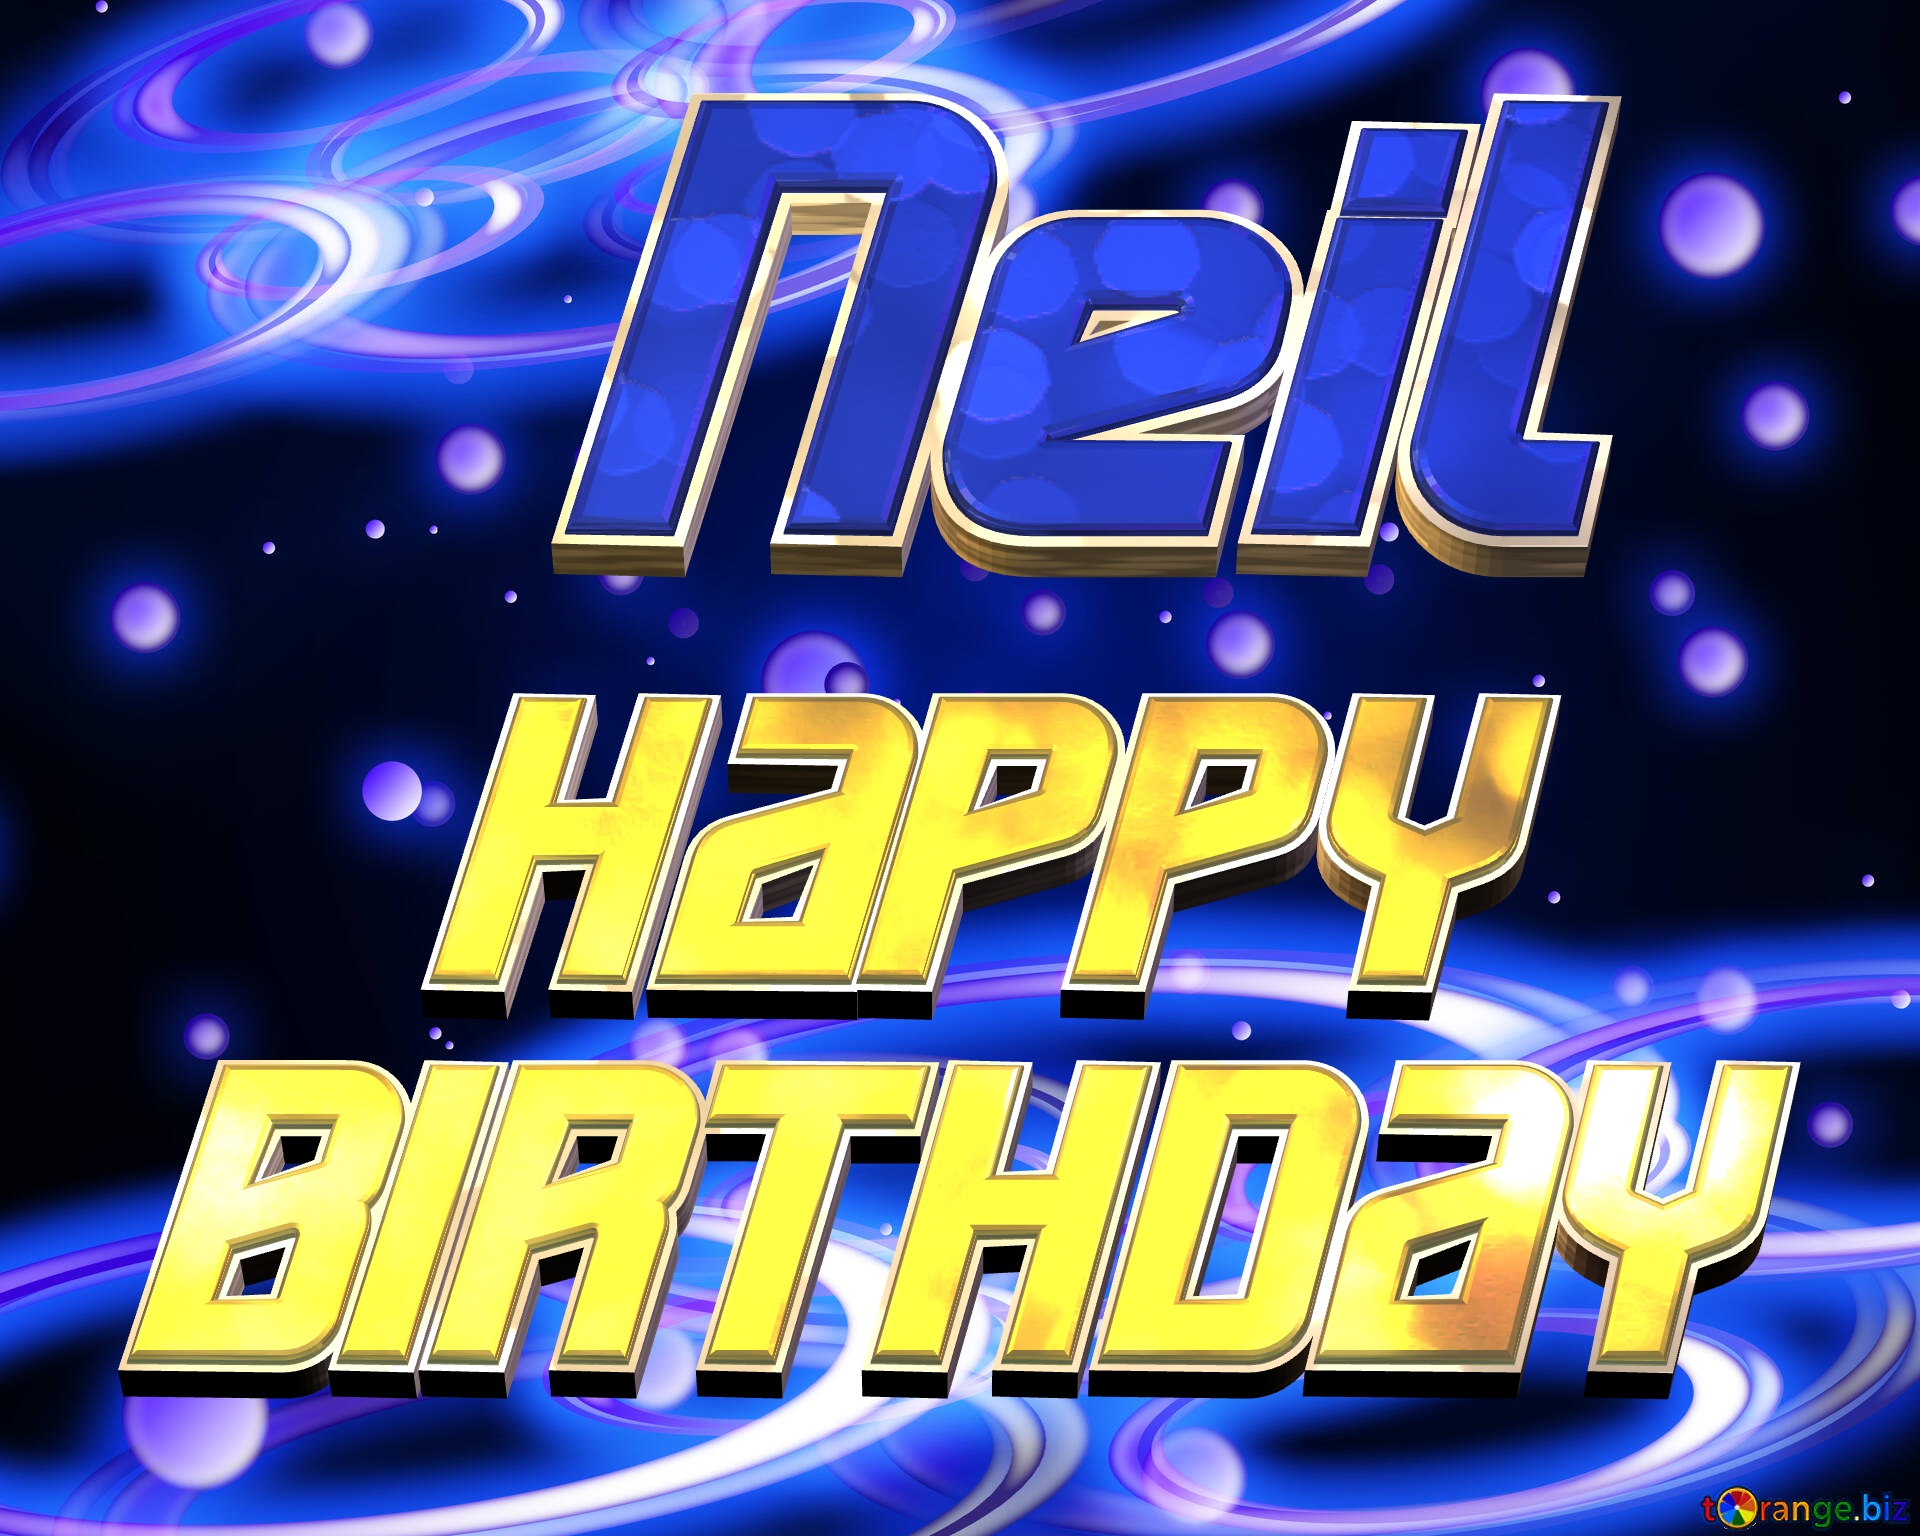 Neil Space Happy Birthday! Technology background №54919